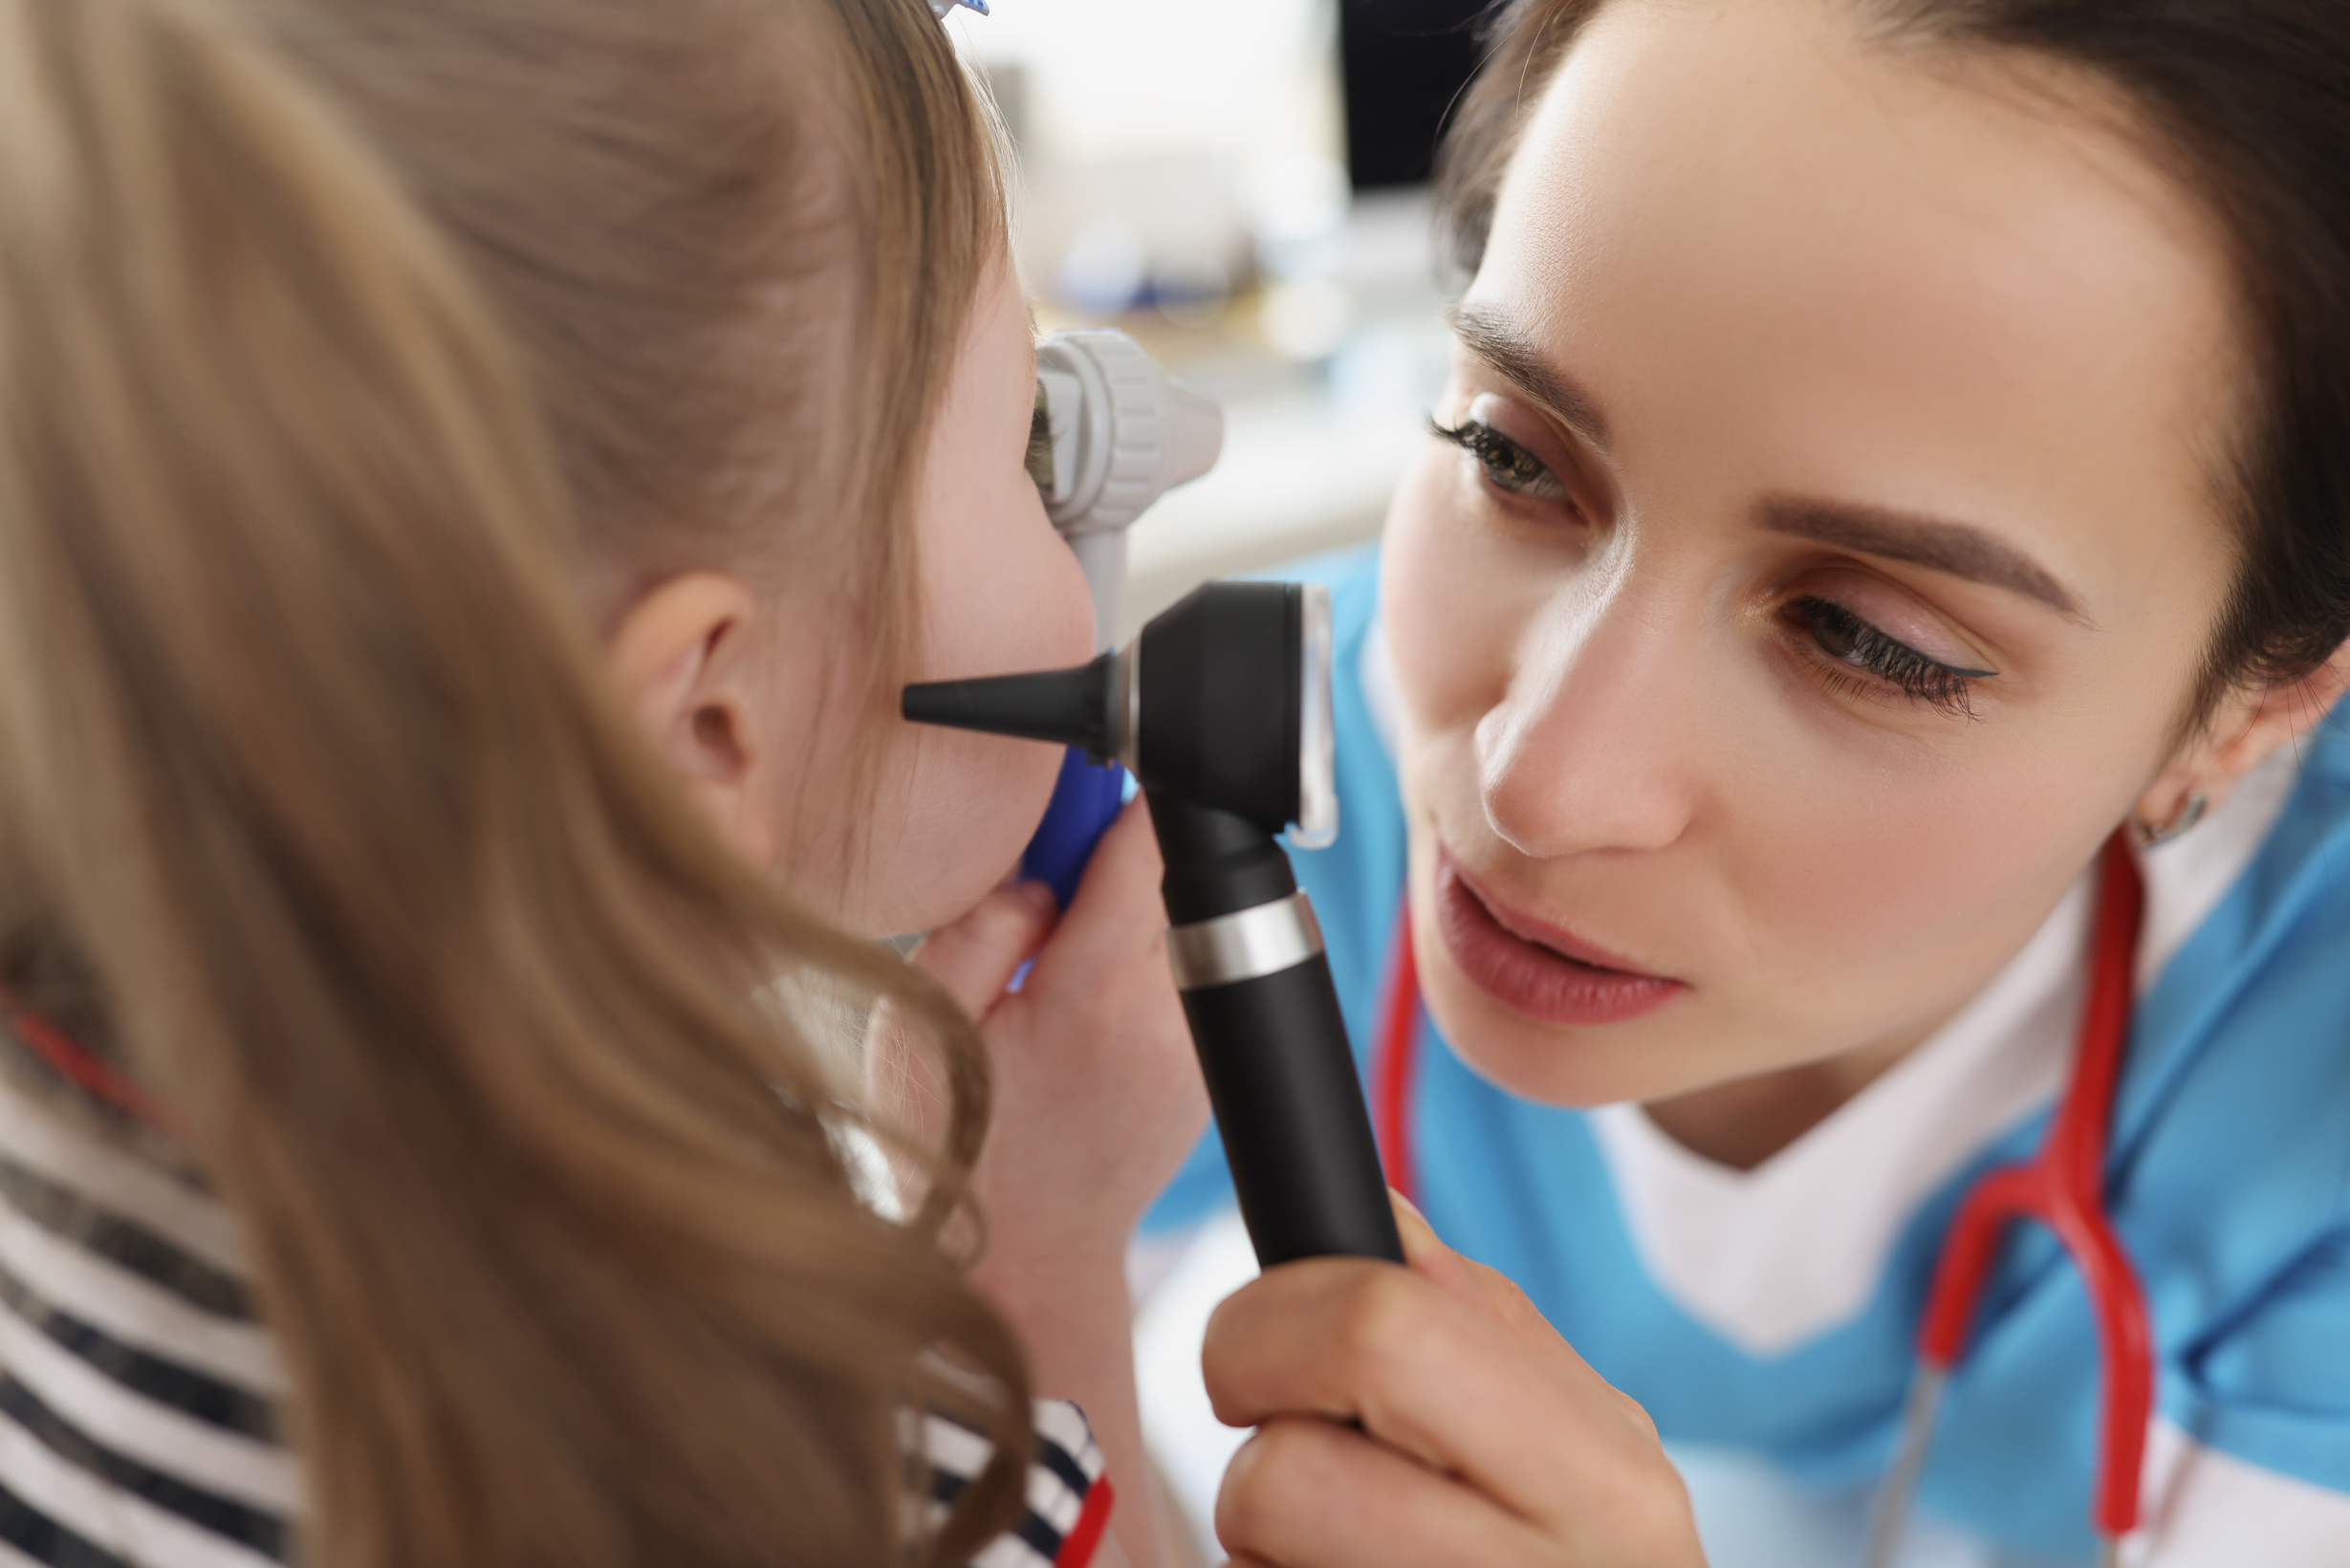 Otolaryngologist Examines Ear of Little Girl Patient